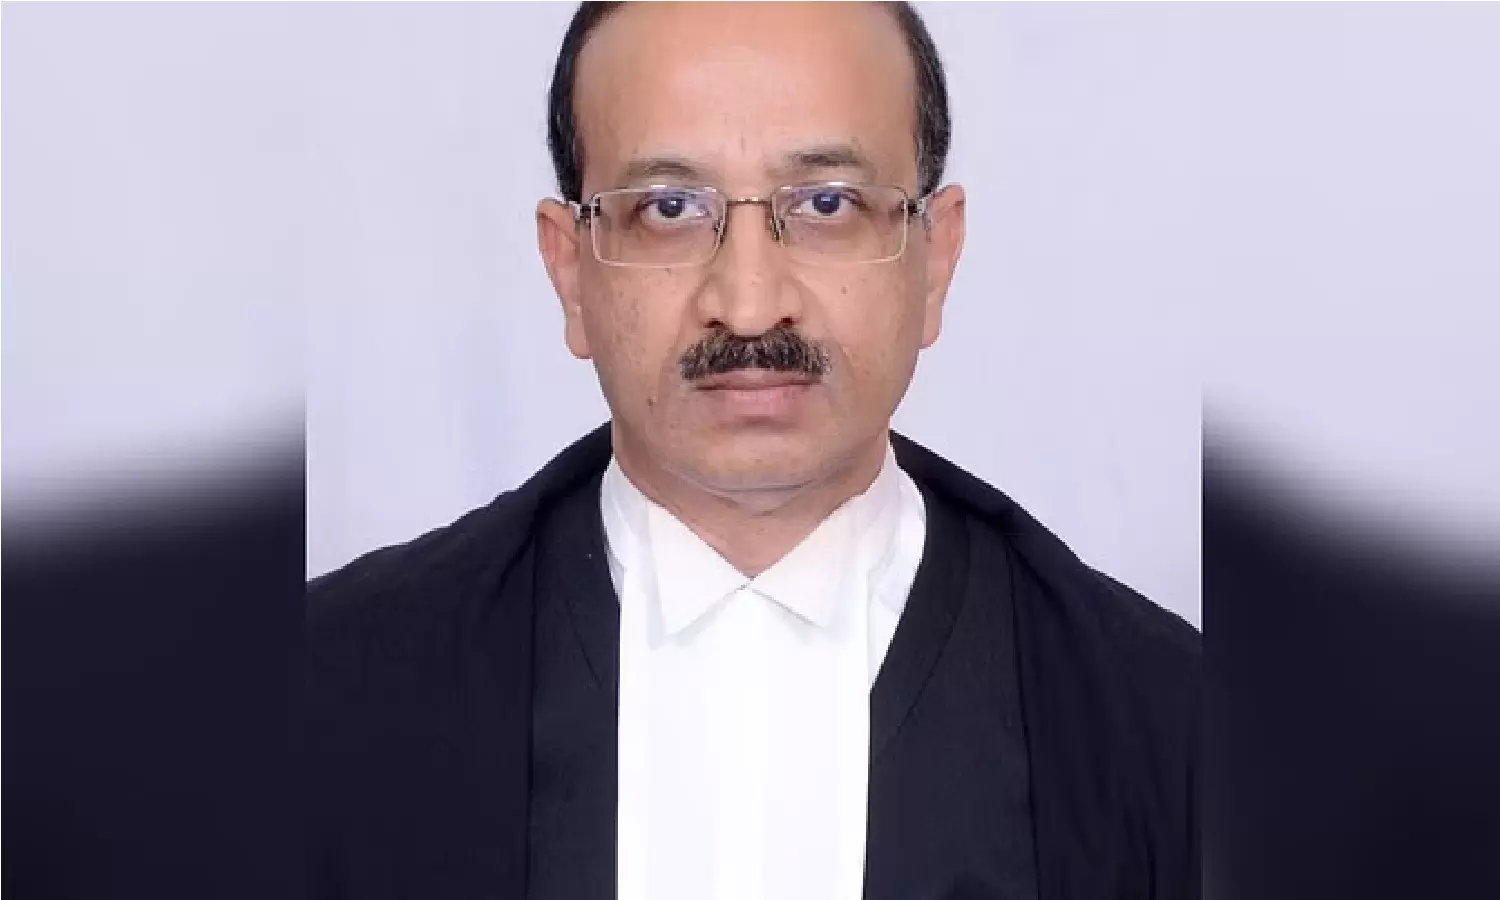 Justice Manoj Kumar Gupta